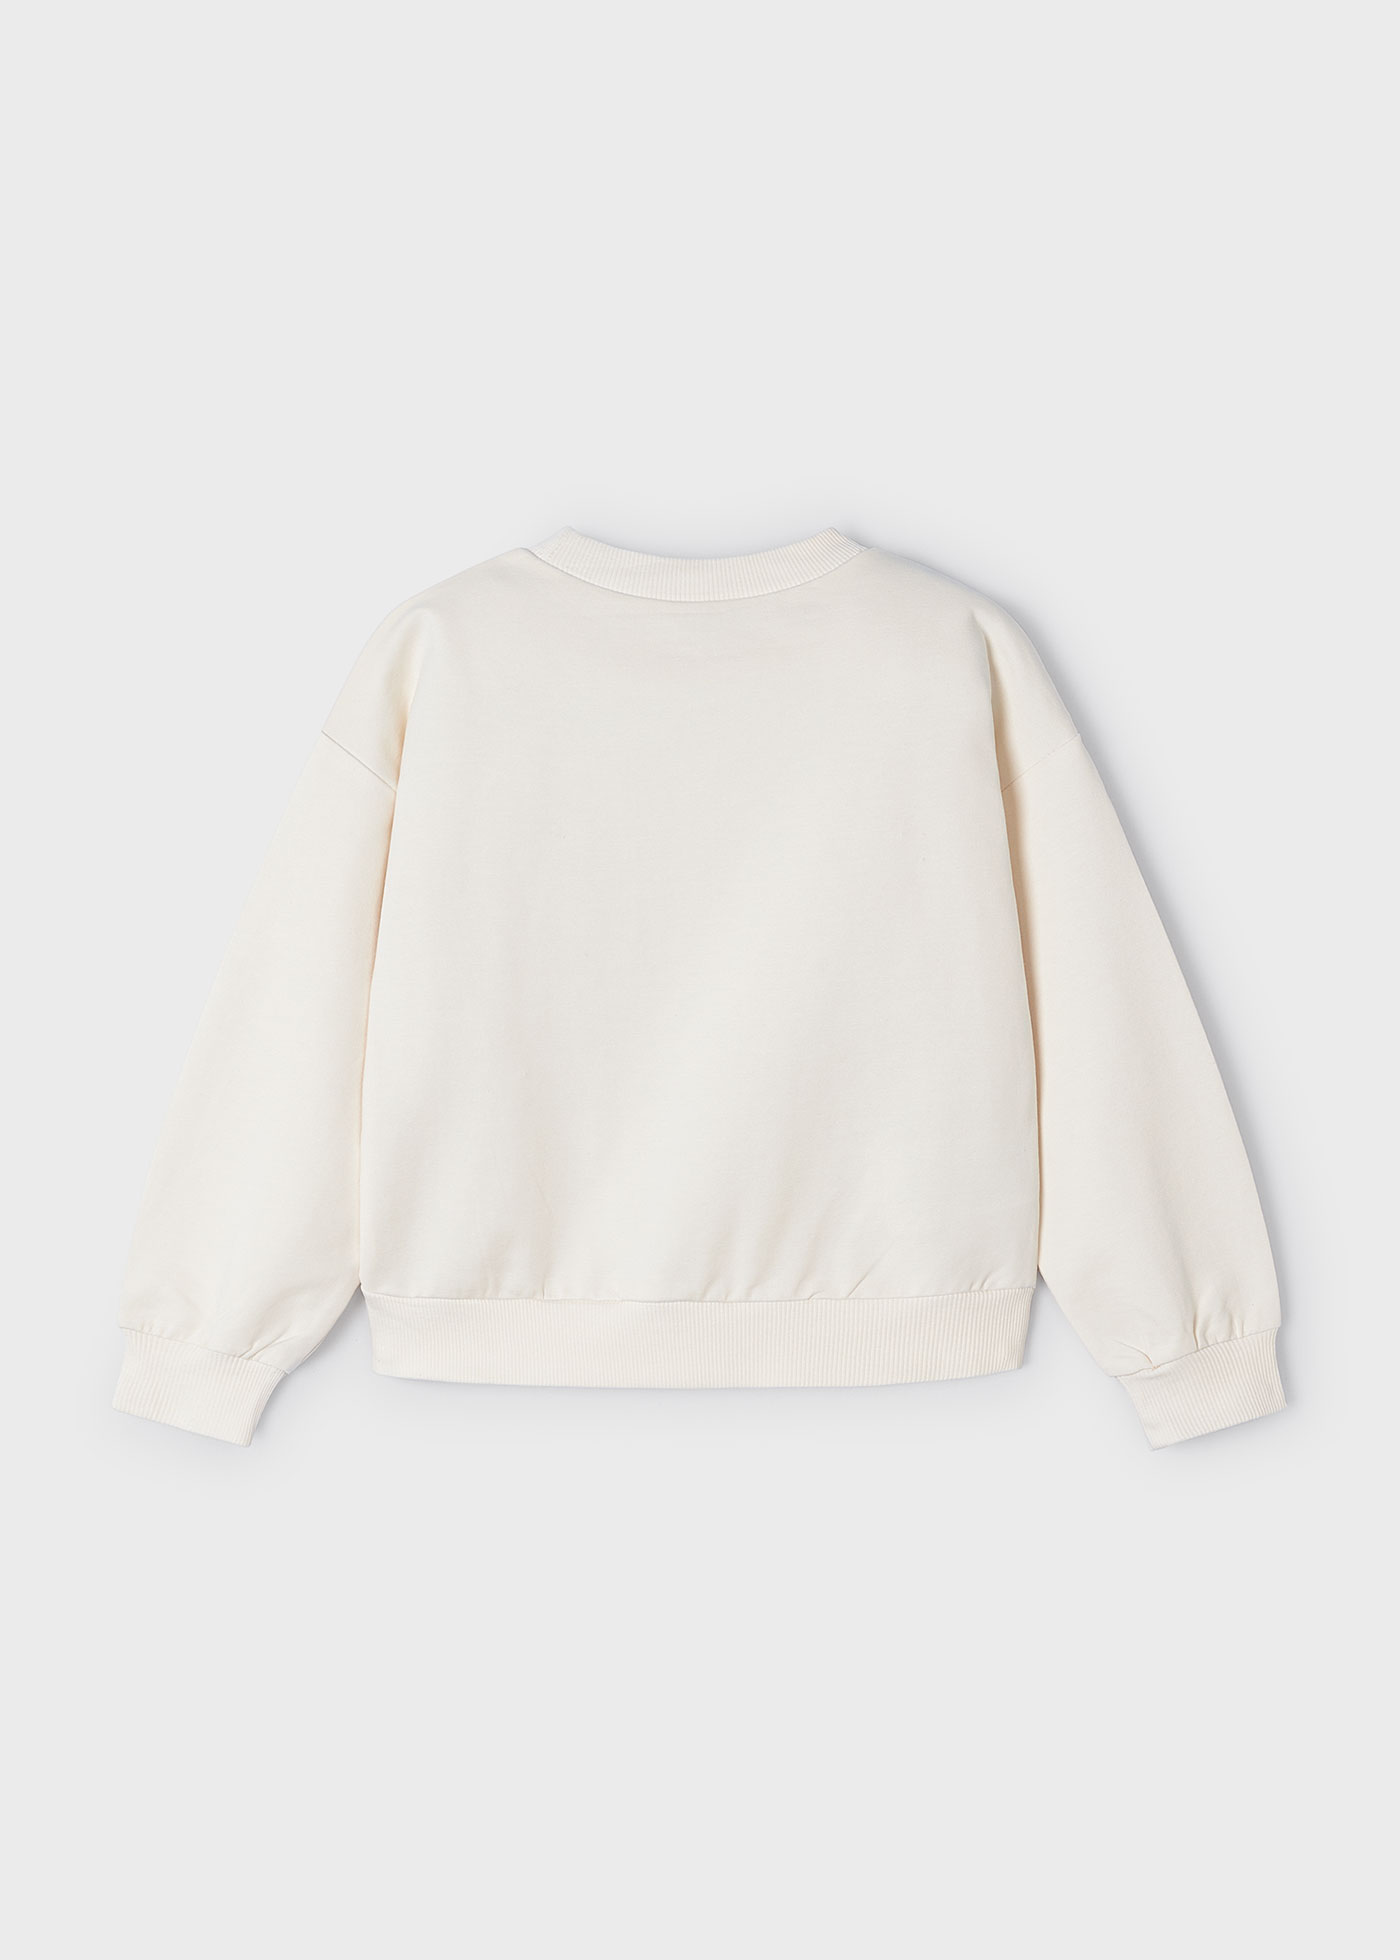 Girl Embroidered Pattern Sweatshirt Better Cotton